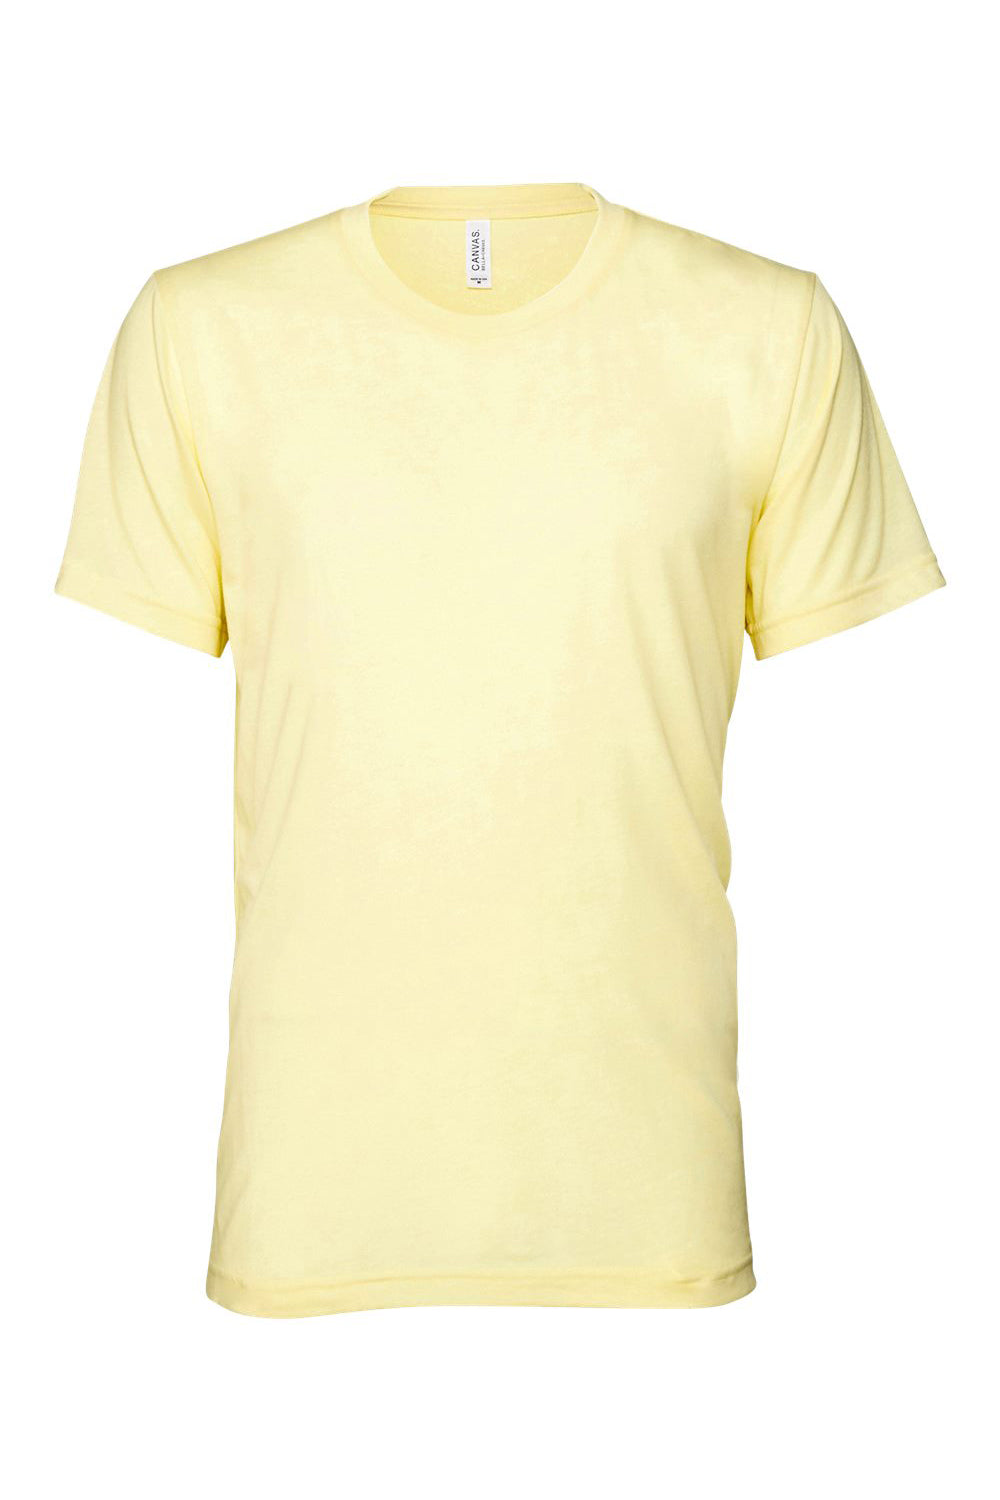 Bella + Canvas BC3413/3413C/3413 Mens Short Sleeve Crewneck T-Shirt Pale Yellow Flat Front